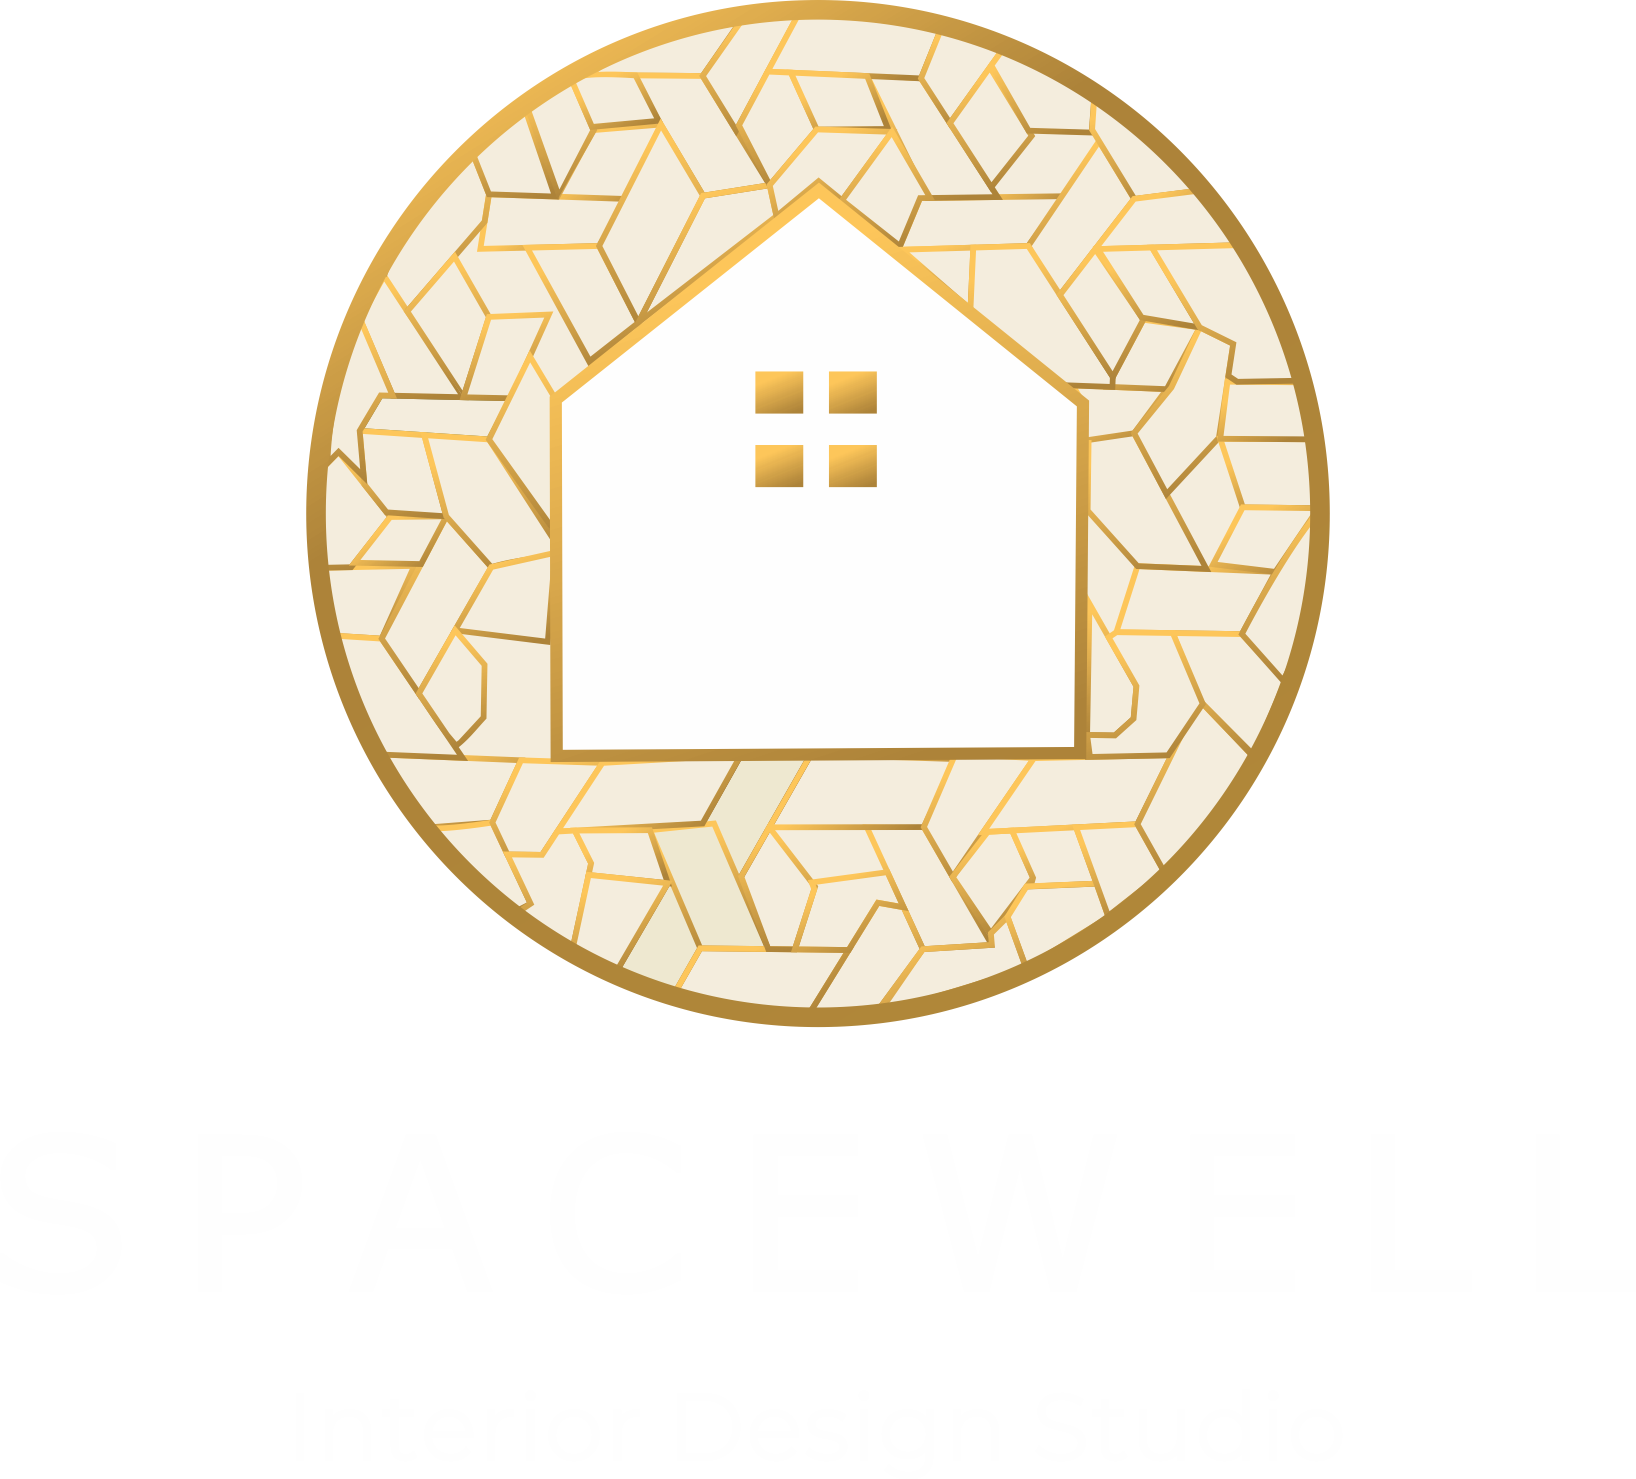 (c) Spacewellid.com